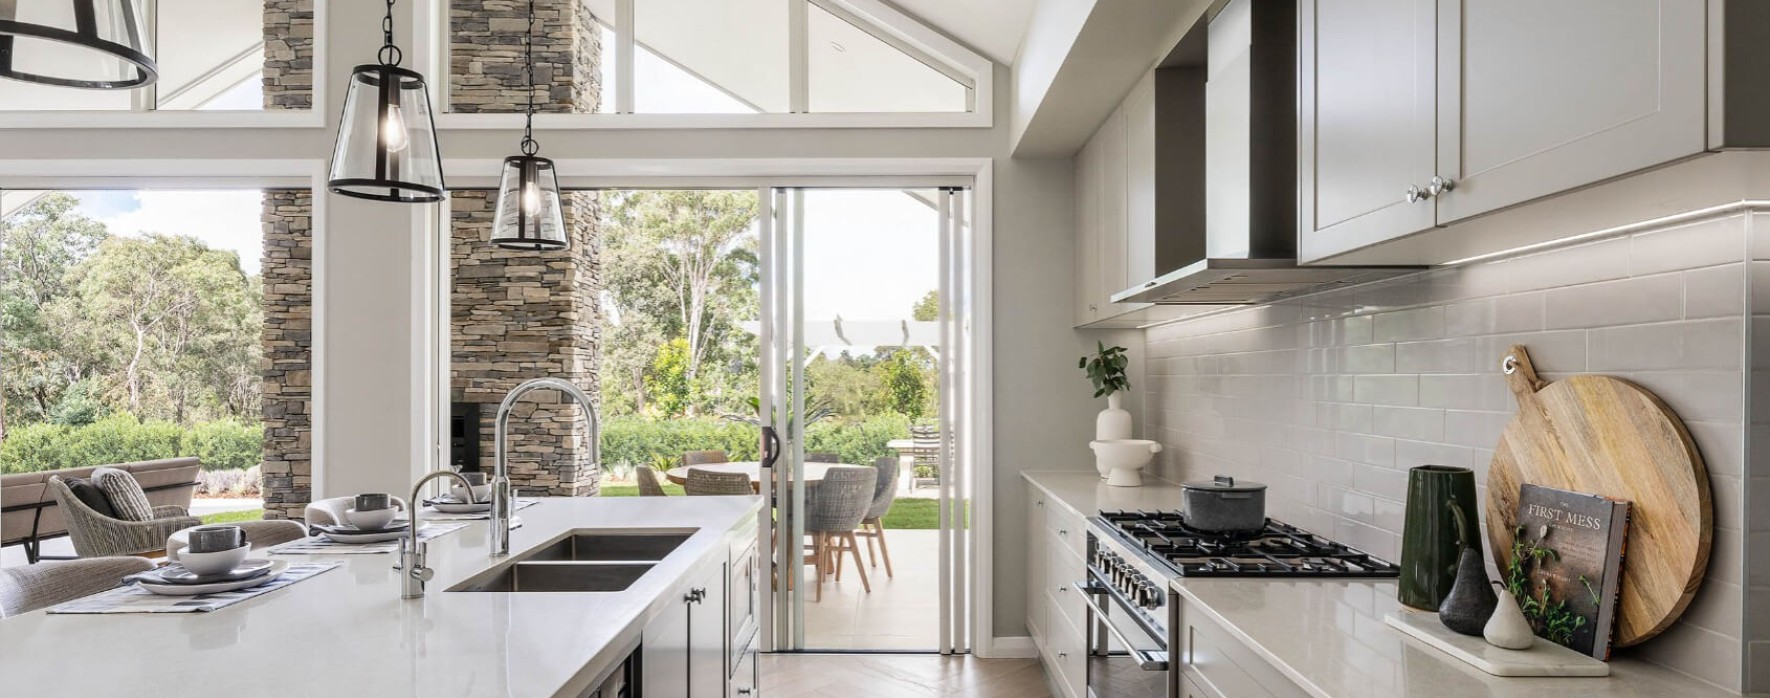 barrington-46-acreage-house-design-kitchen